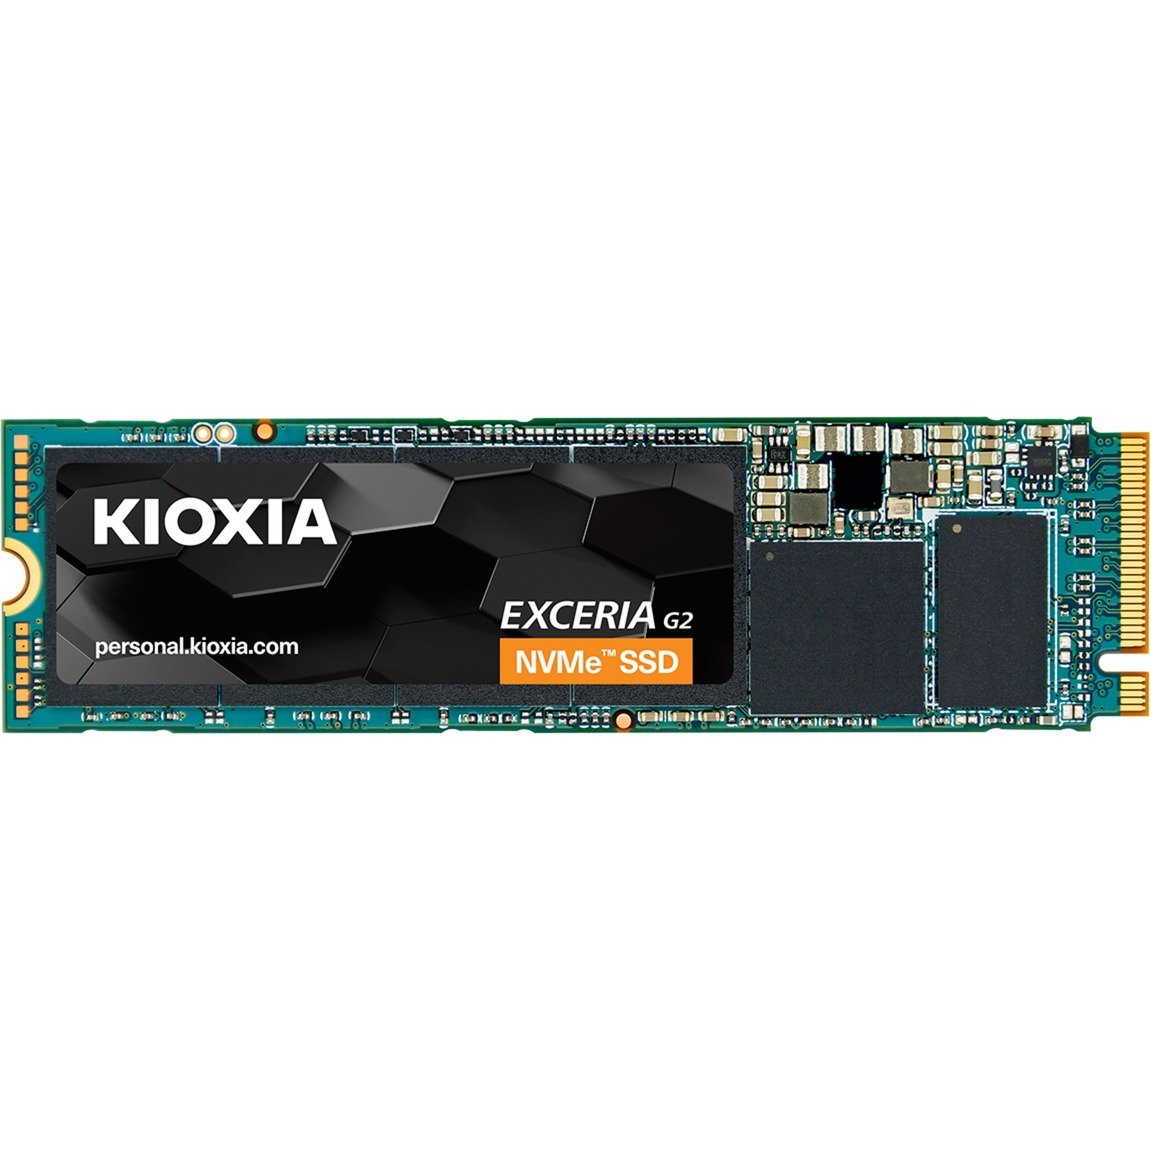 Exceria G2 2 TB, SSD von Kioxia